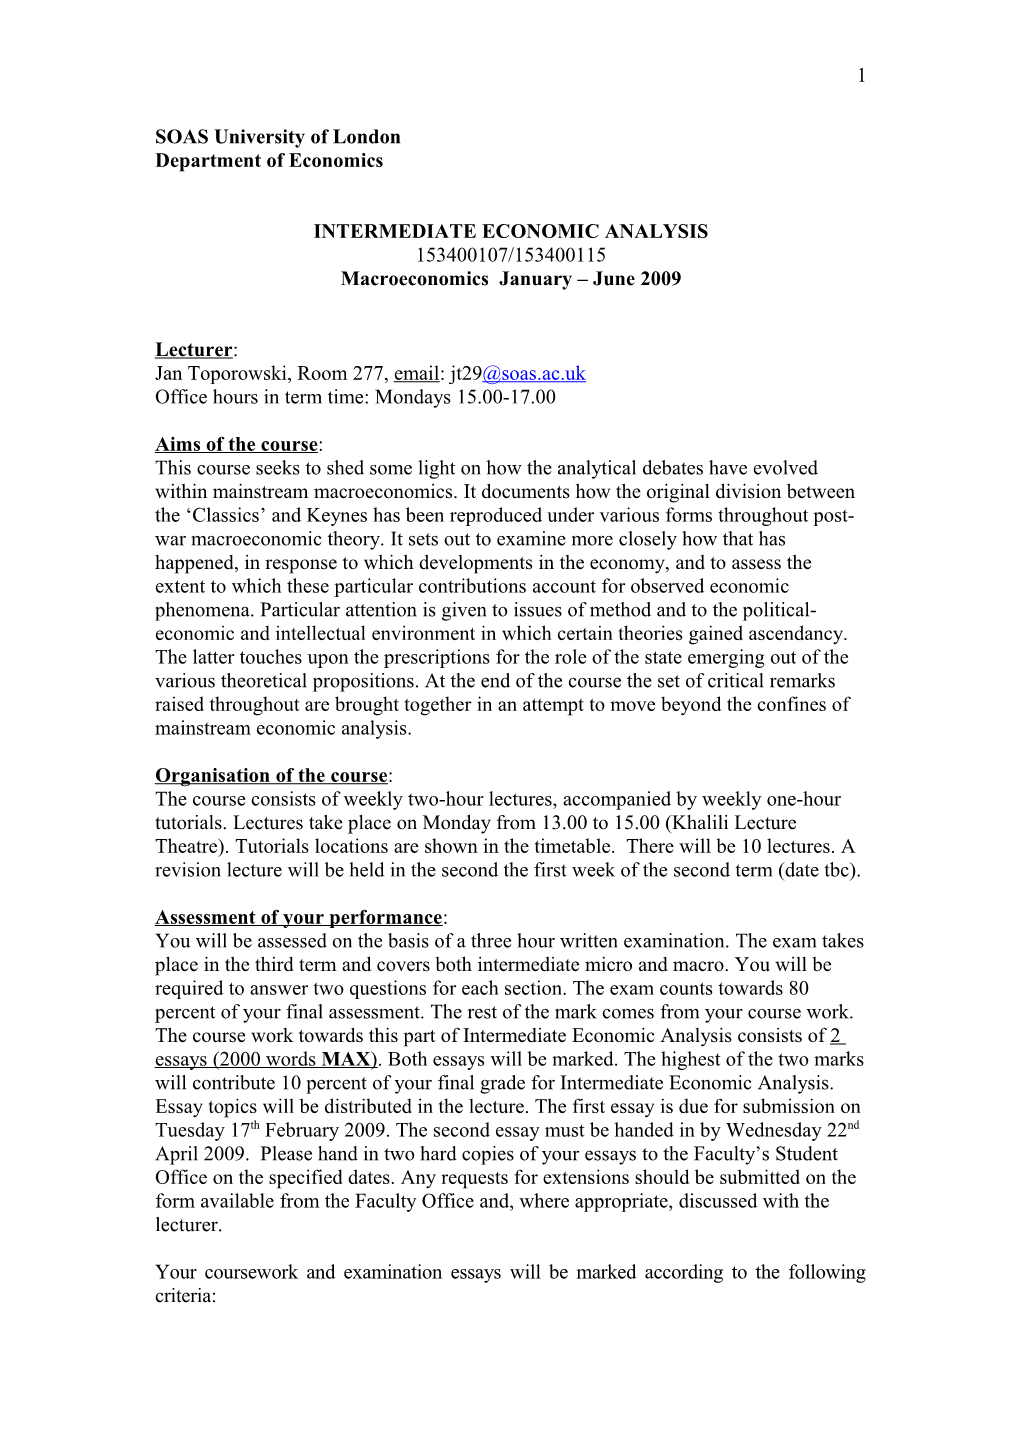 Handbook and Reading List for SOAS Intermediate Economic Analysis 2009